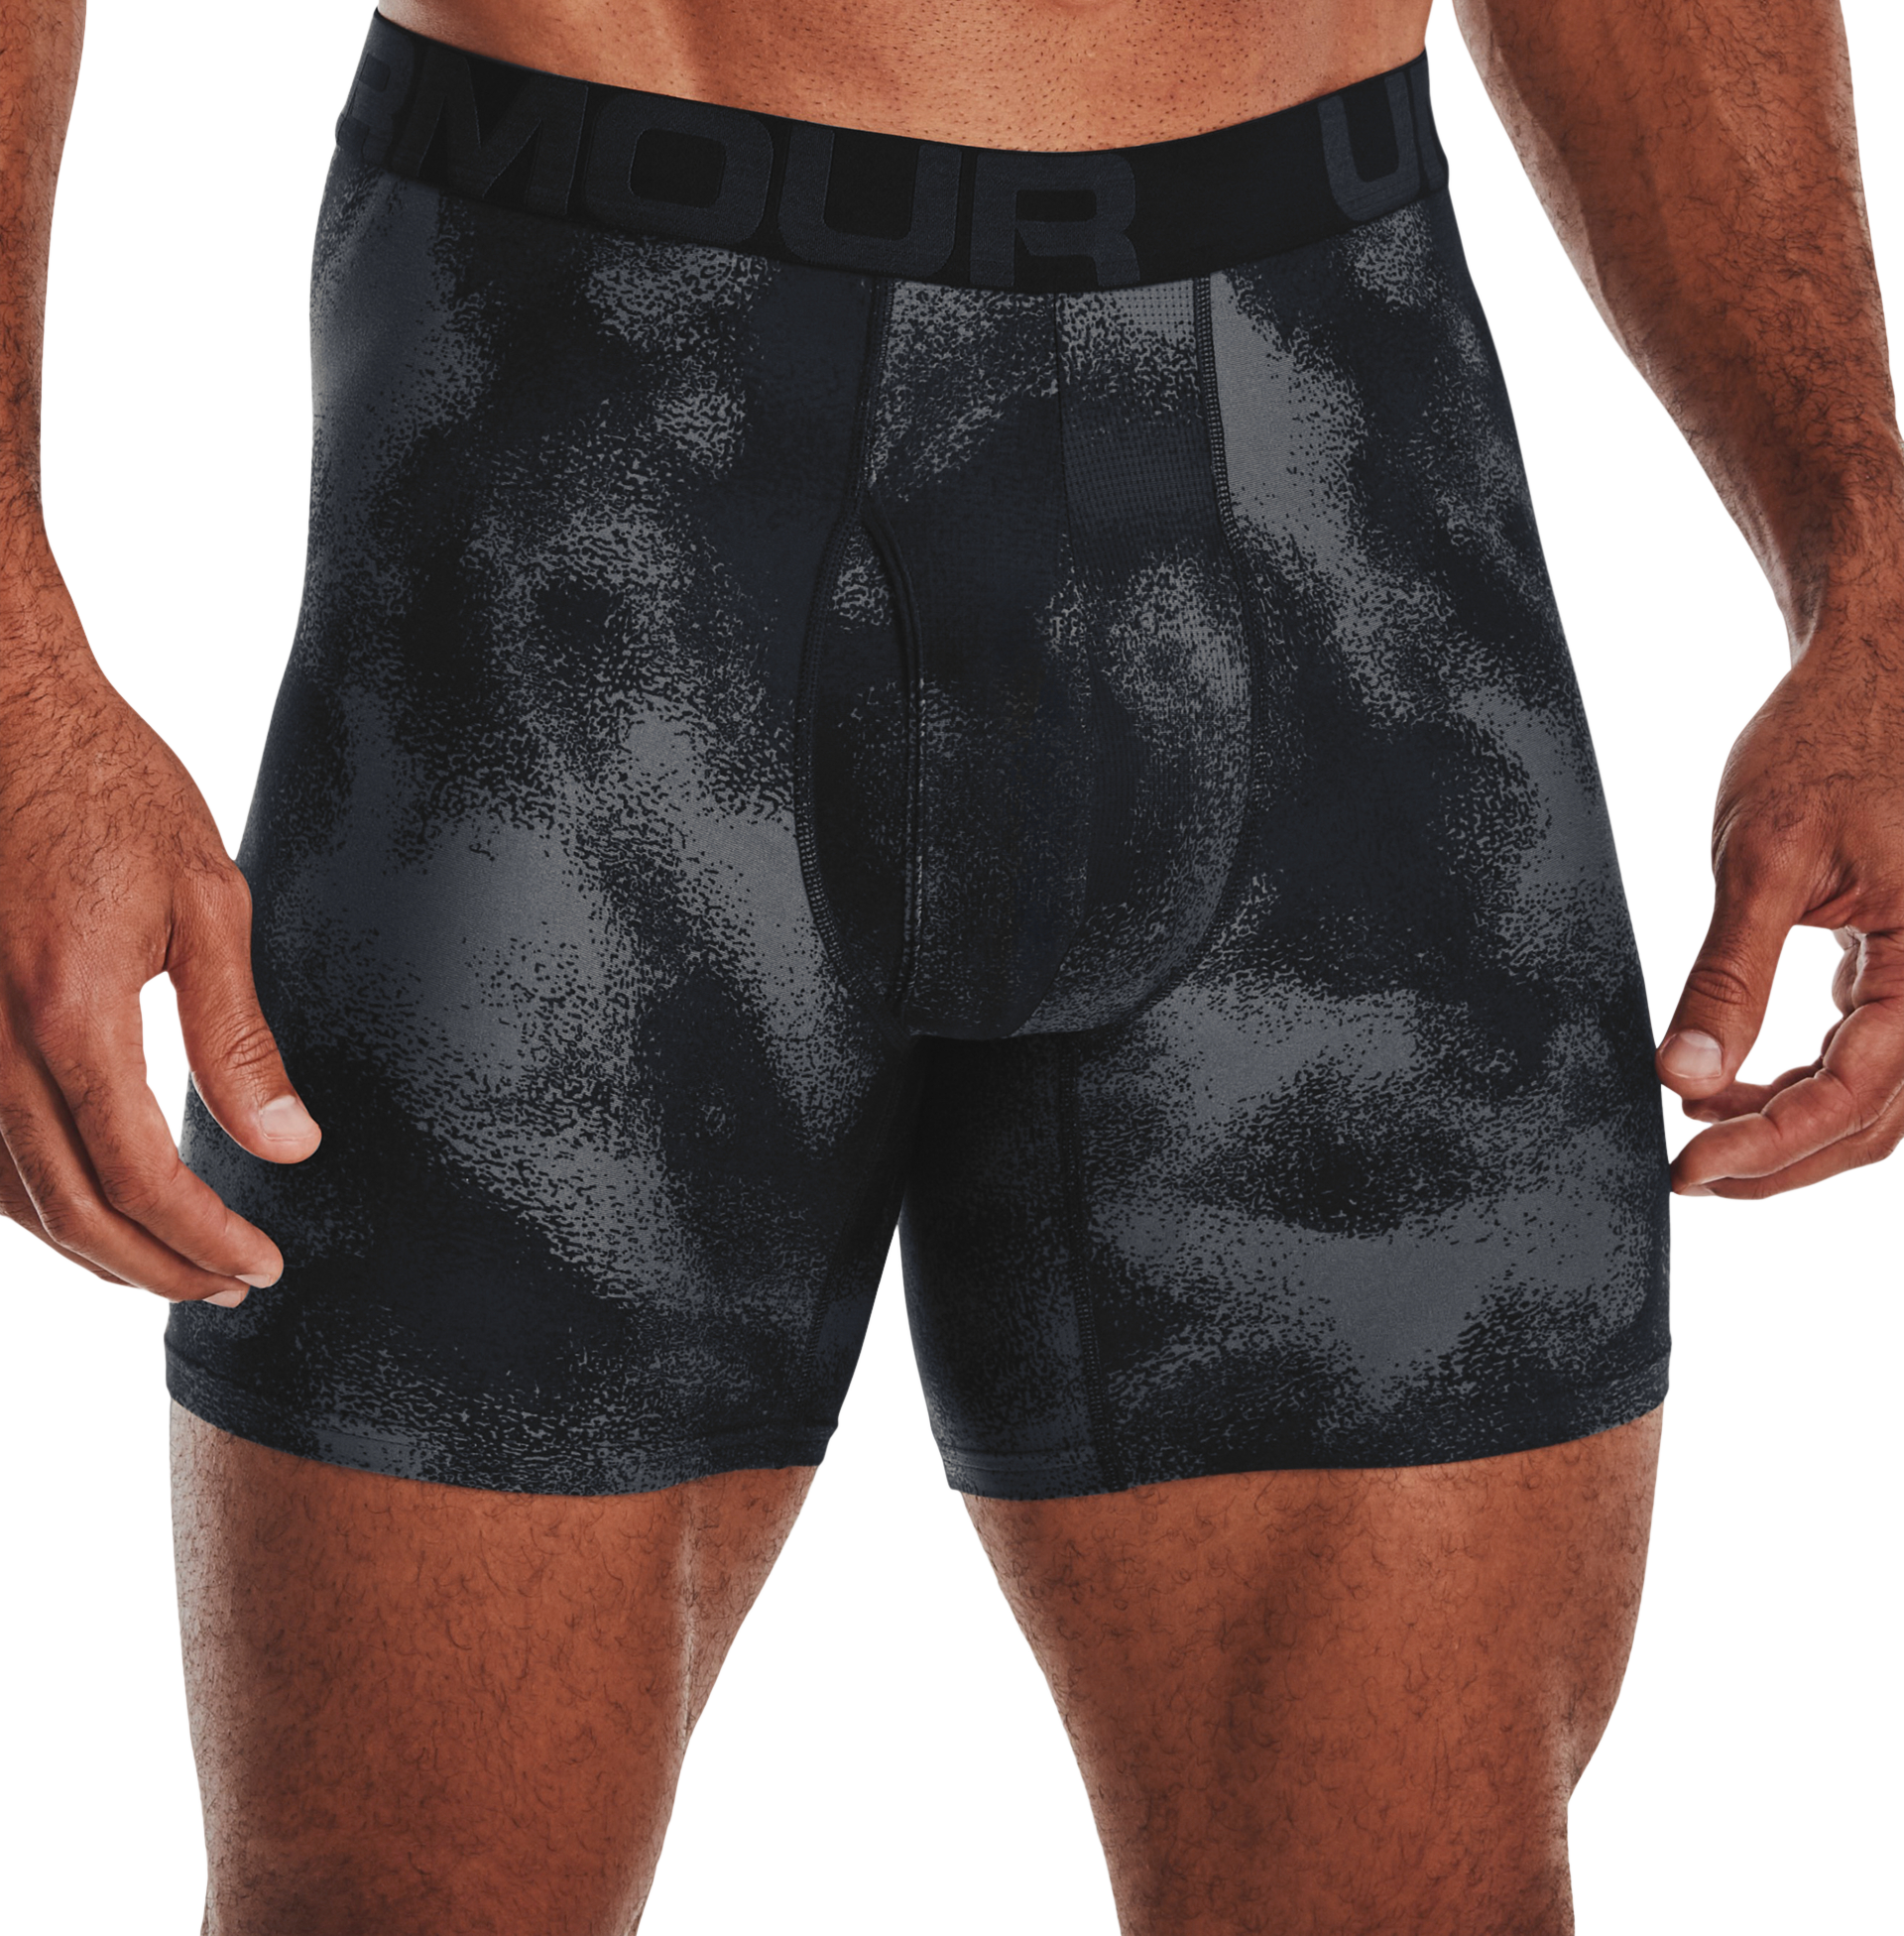 Under Armour Tech 6"" Patterned Boxerjock Shorts for Men - Pitch Gray/Jet Gray-22 - 3XL